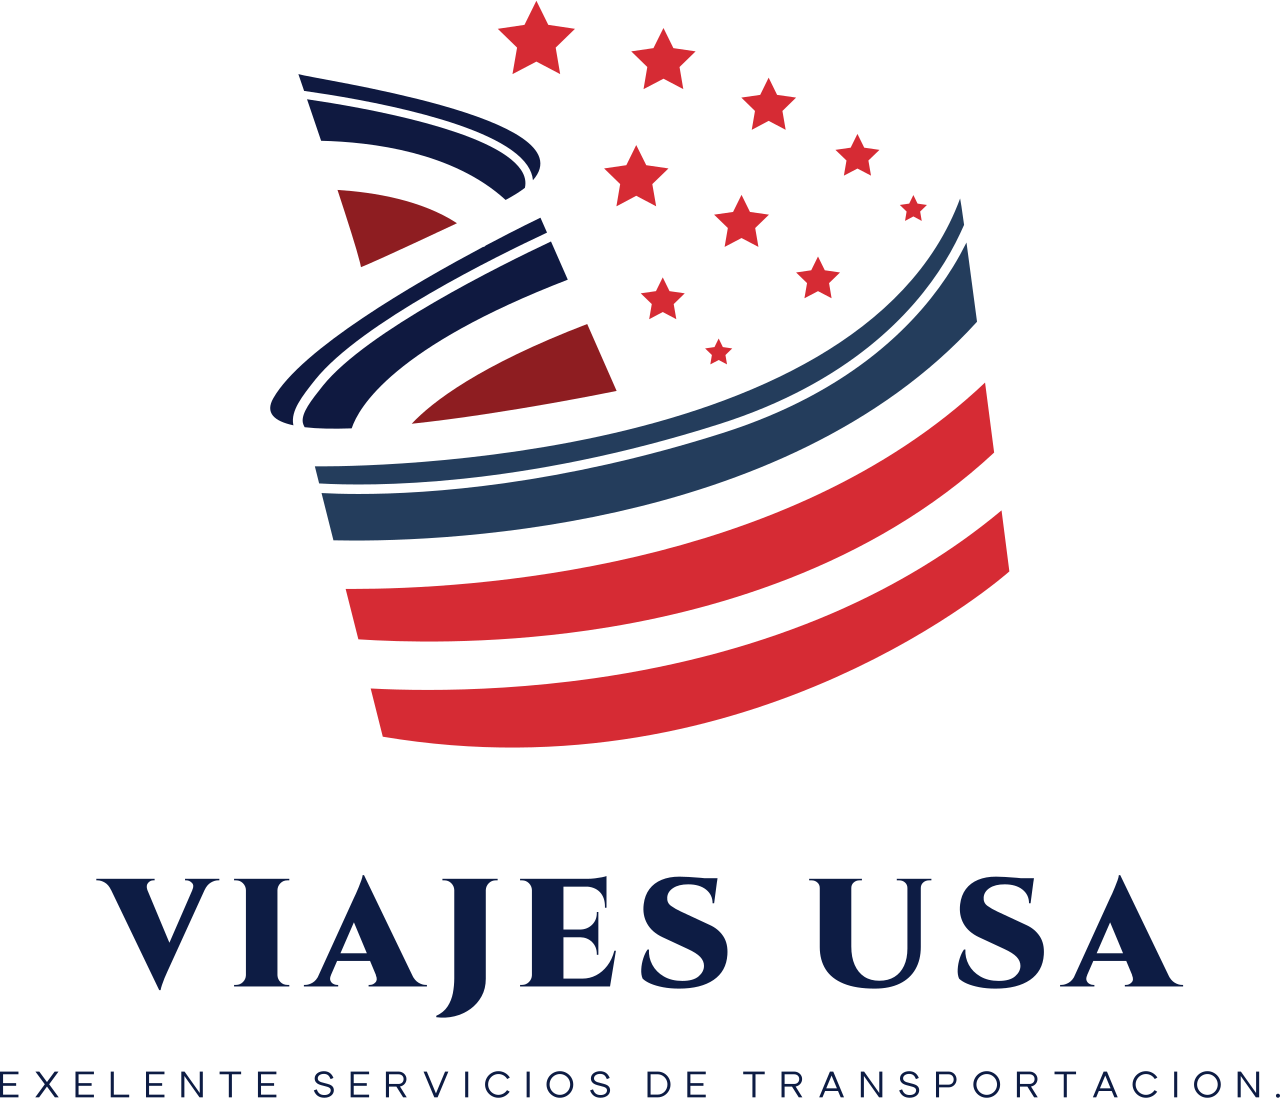 Viajes USA's web page